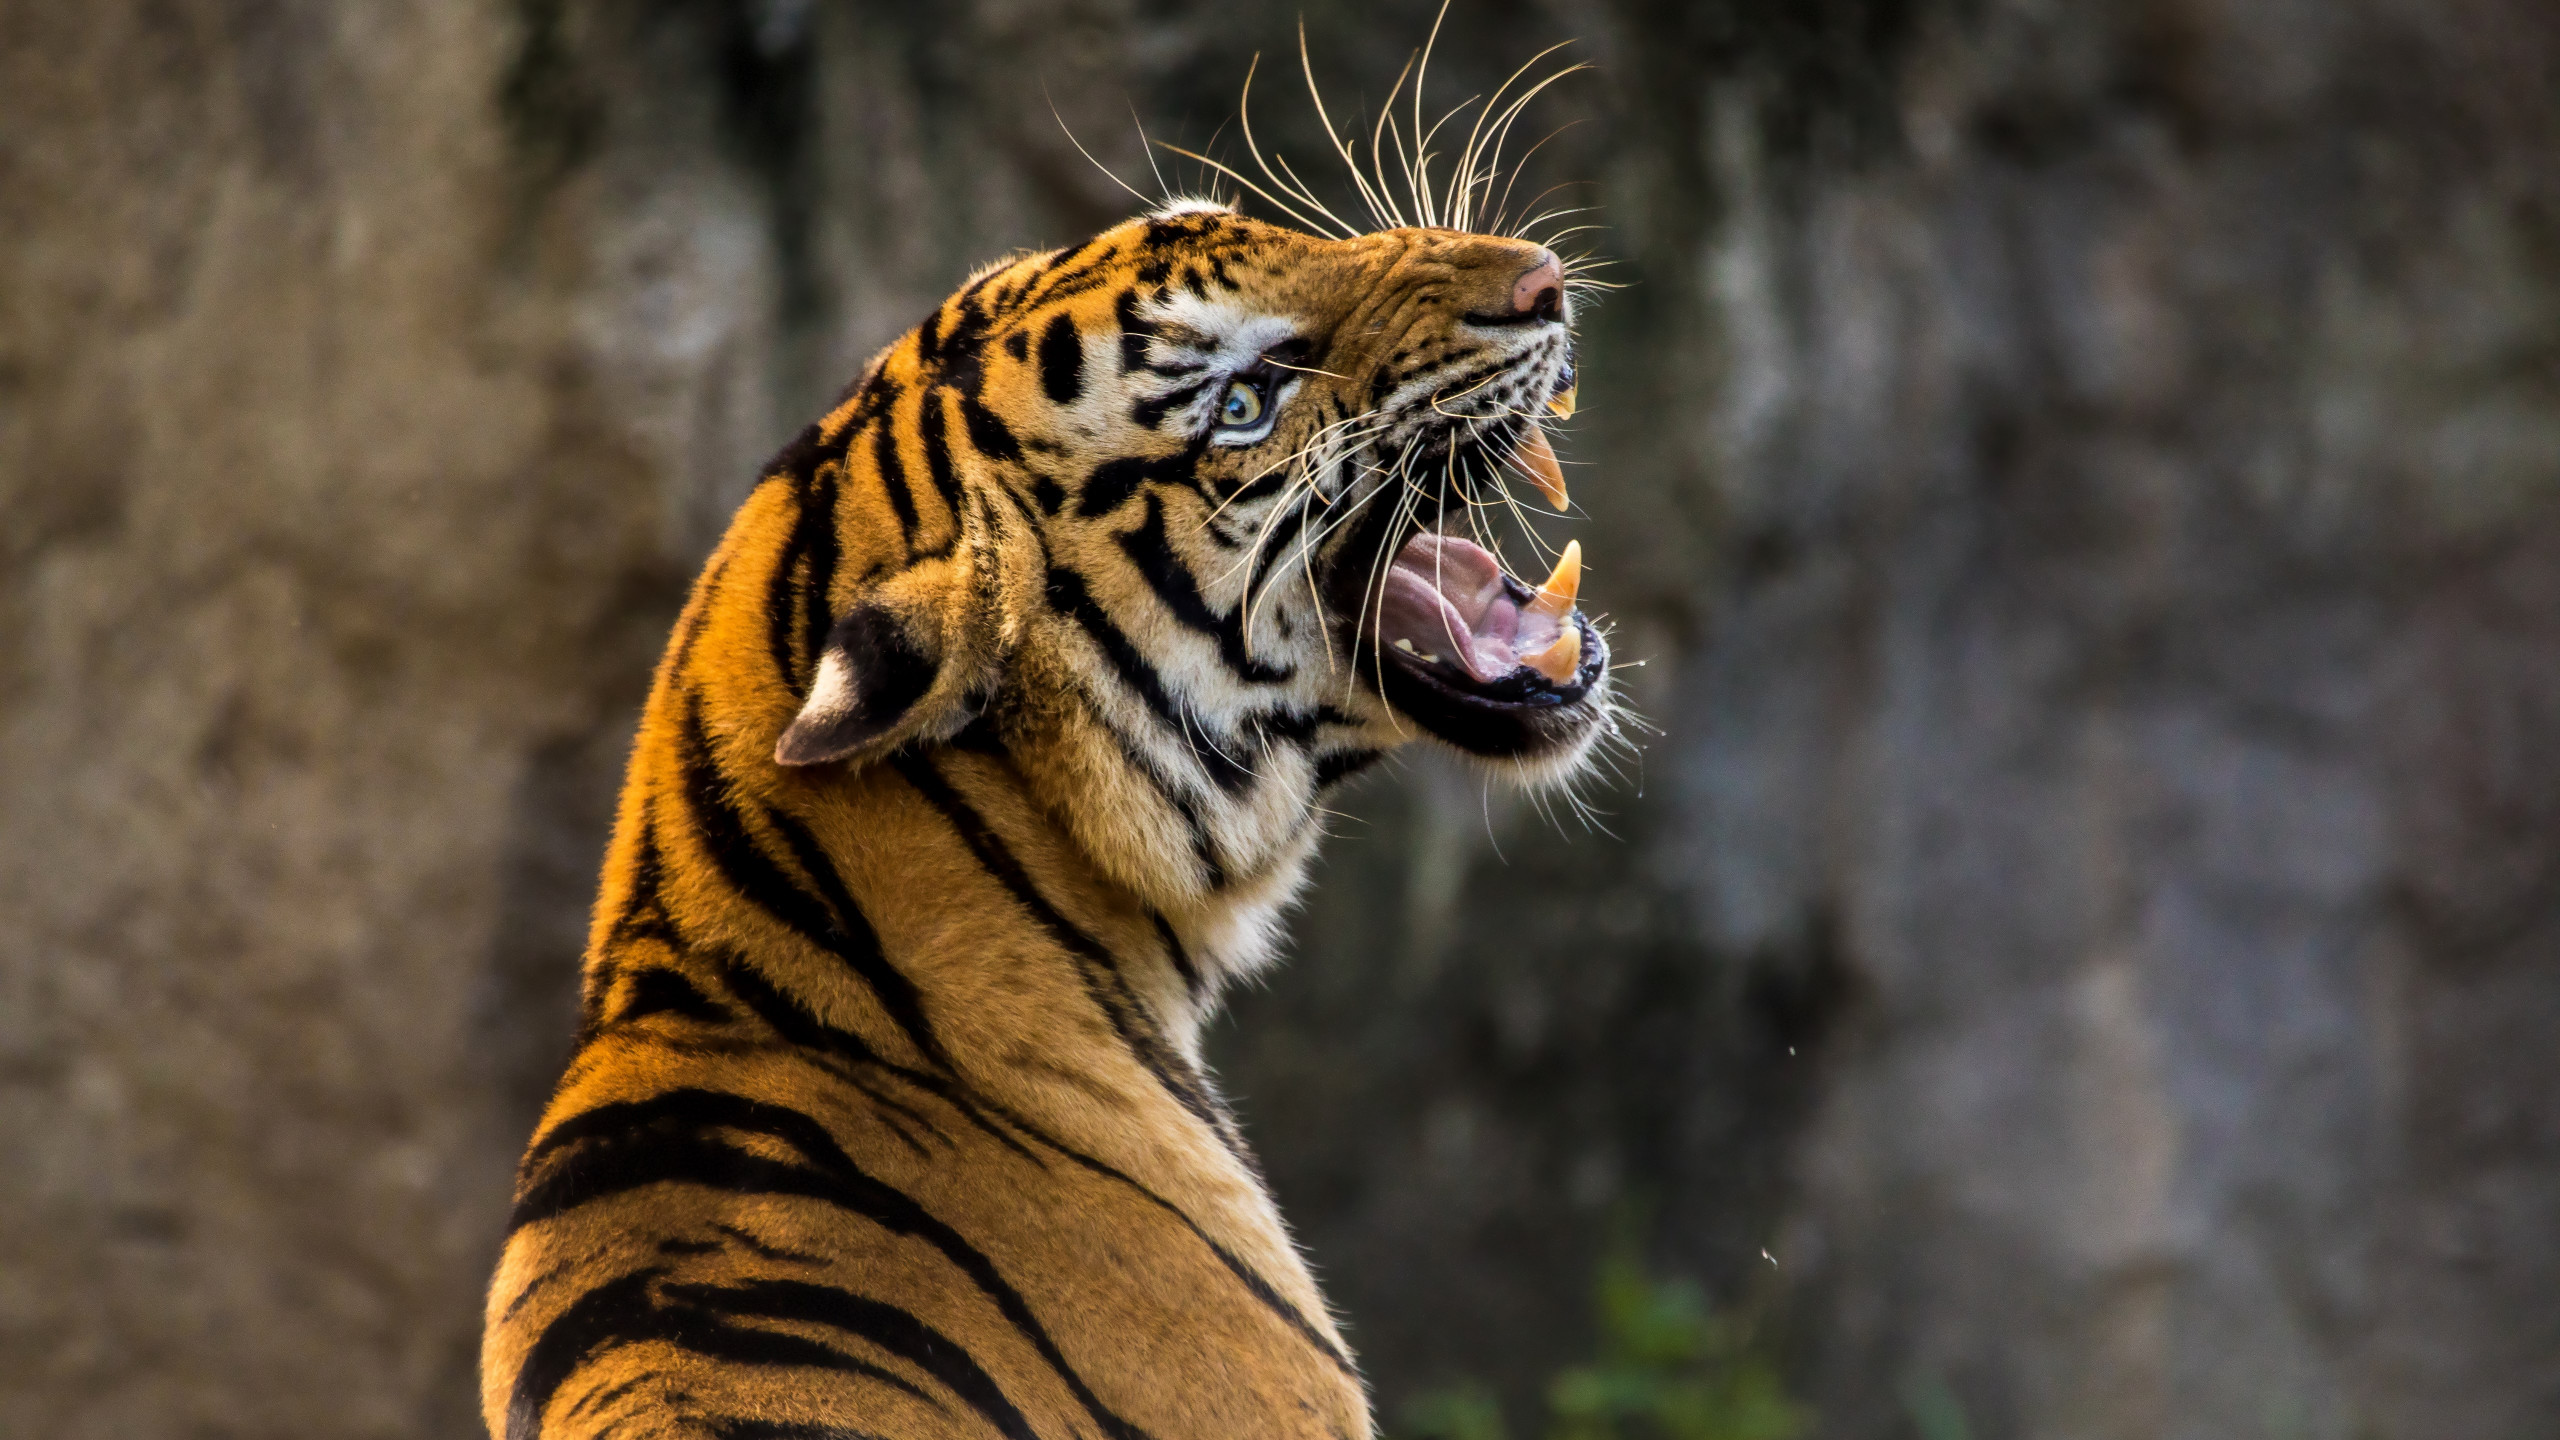 Angry tiger wallpaper 2560x1440